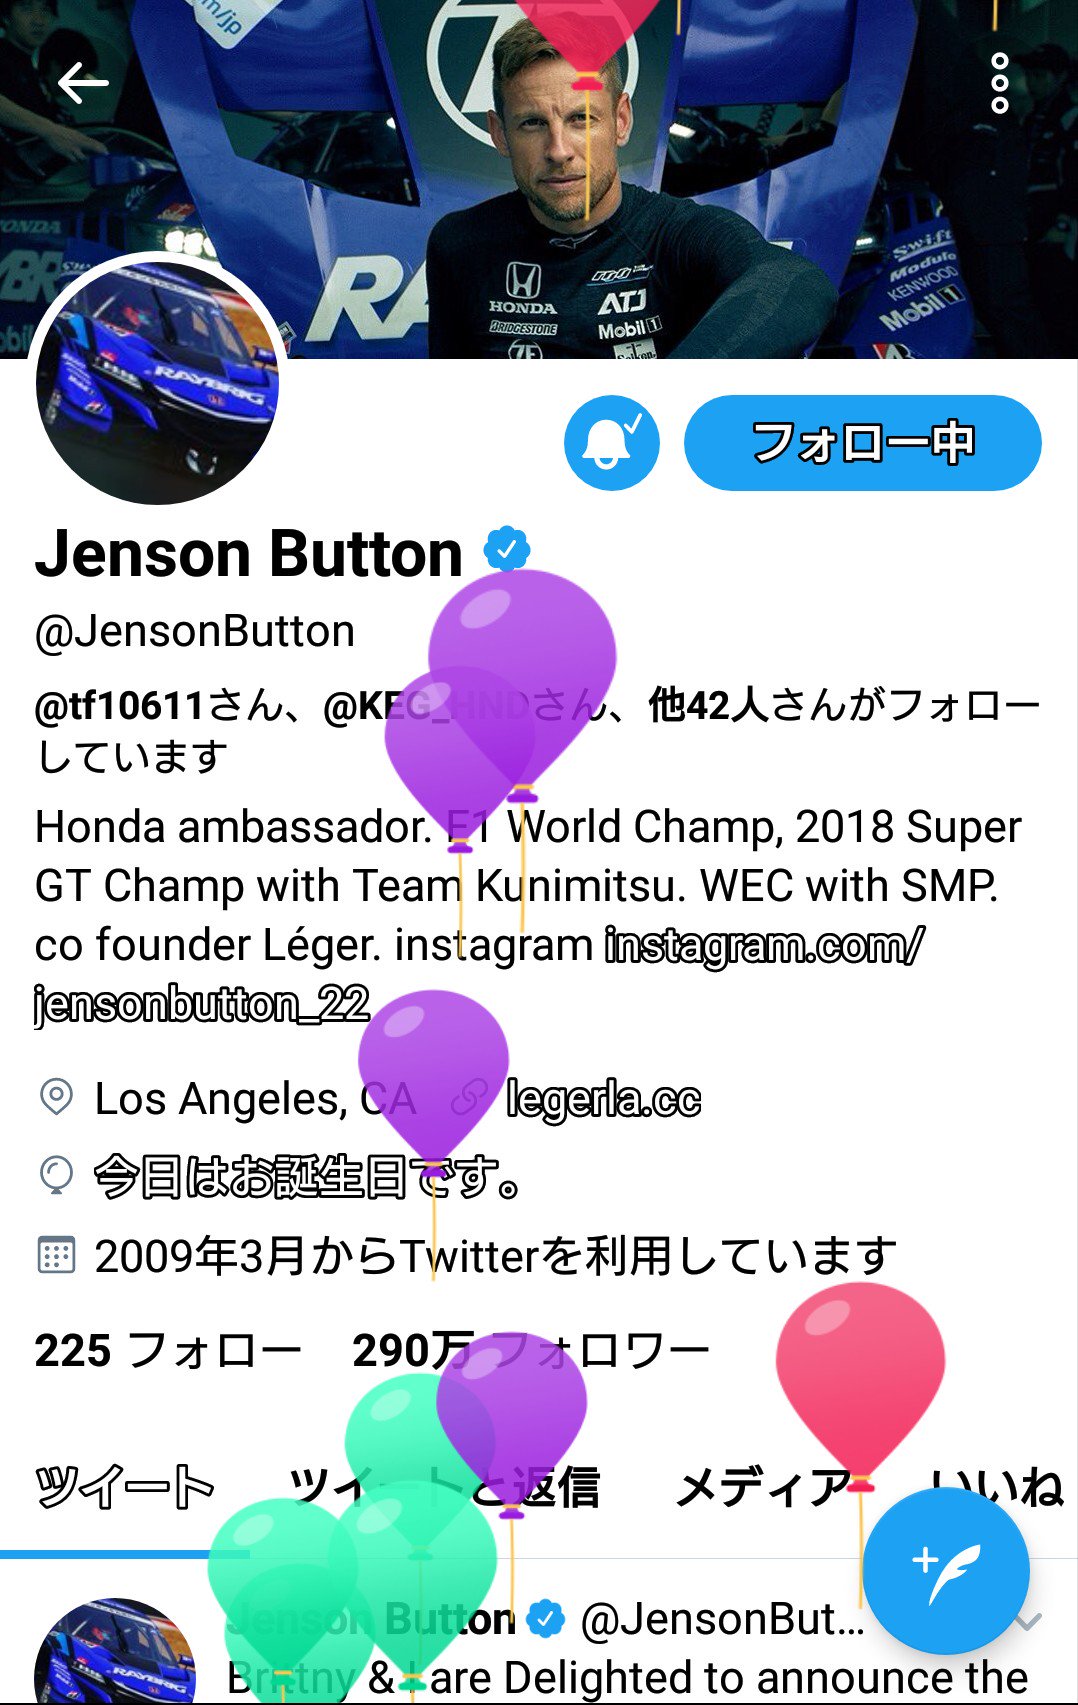    Jenson Button            Happy birthday to Jenson   